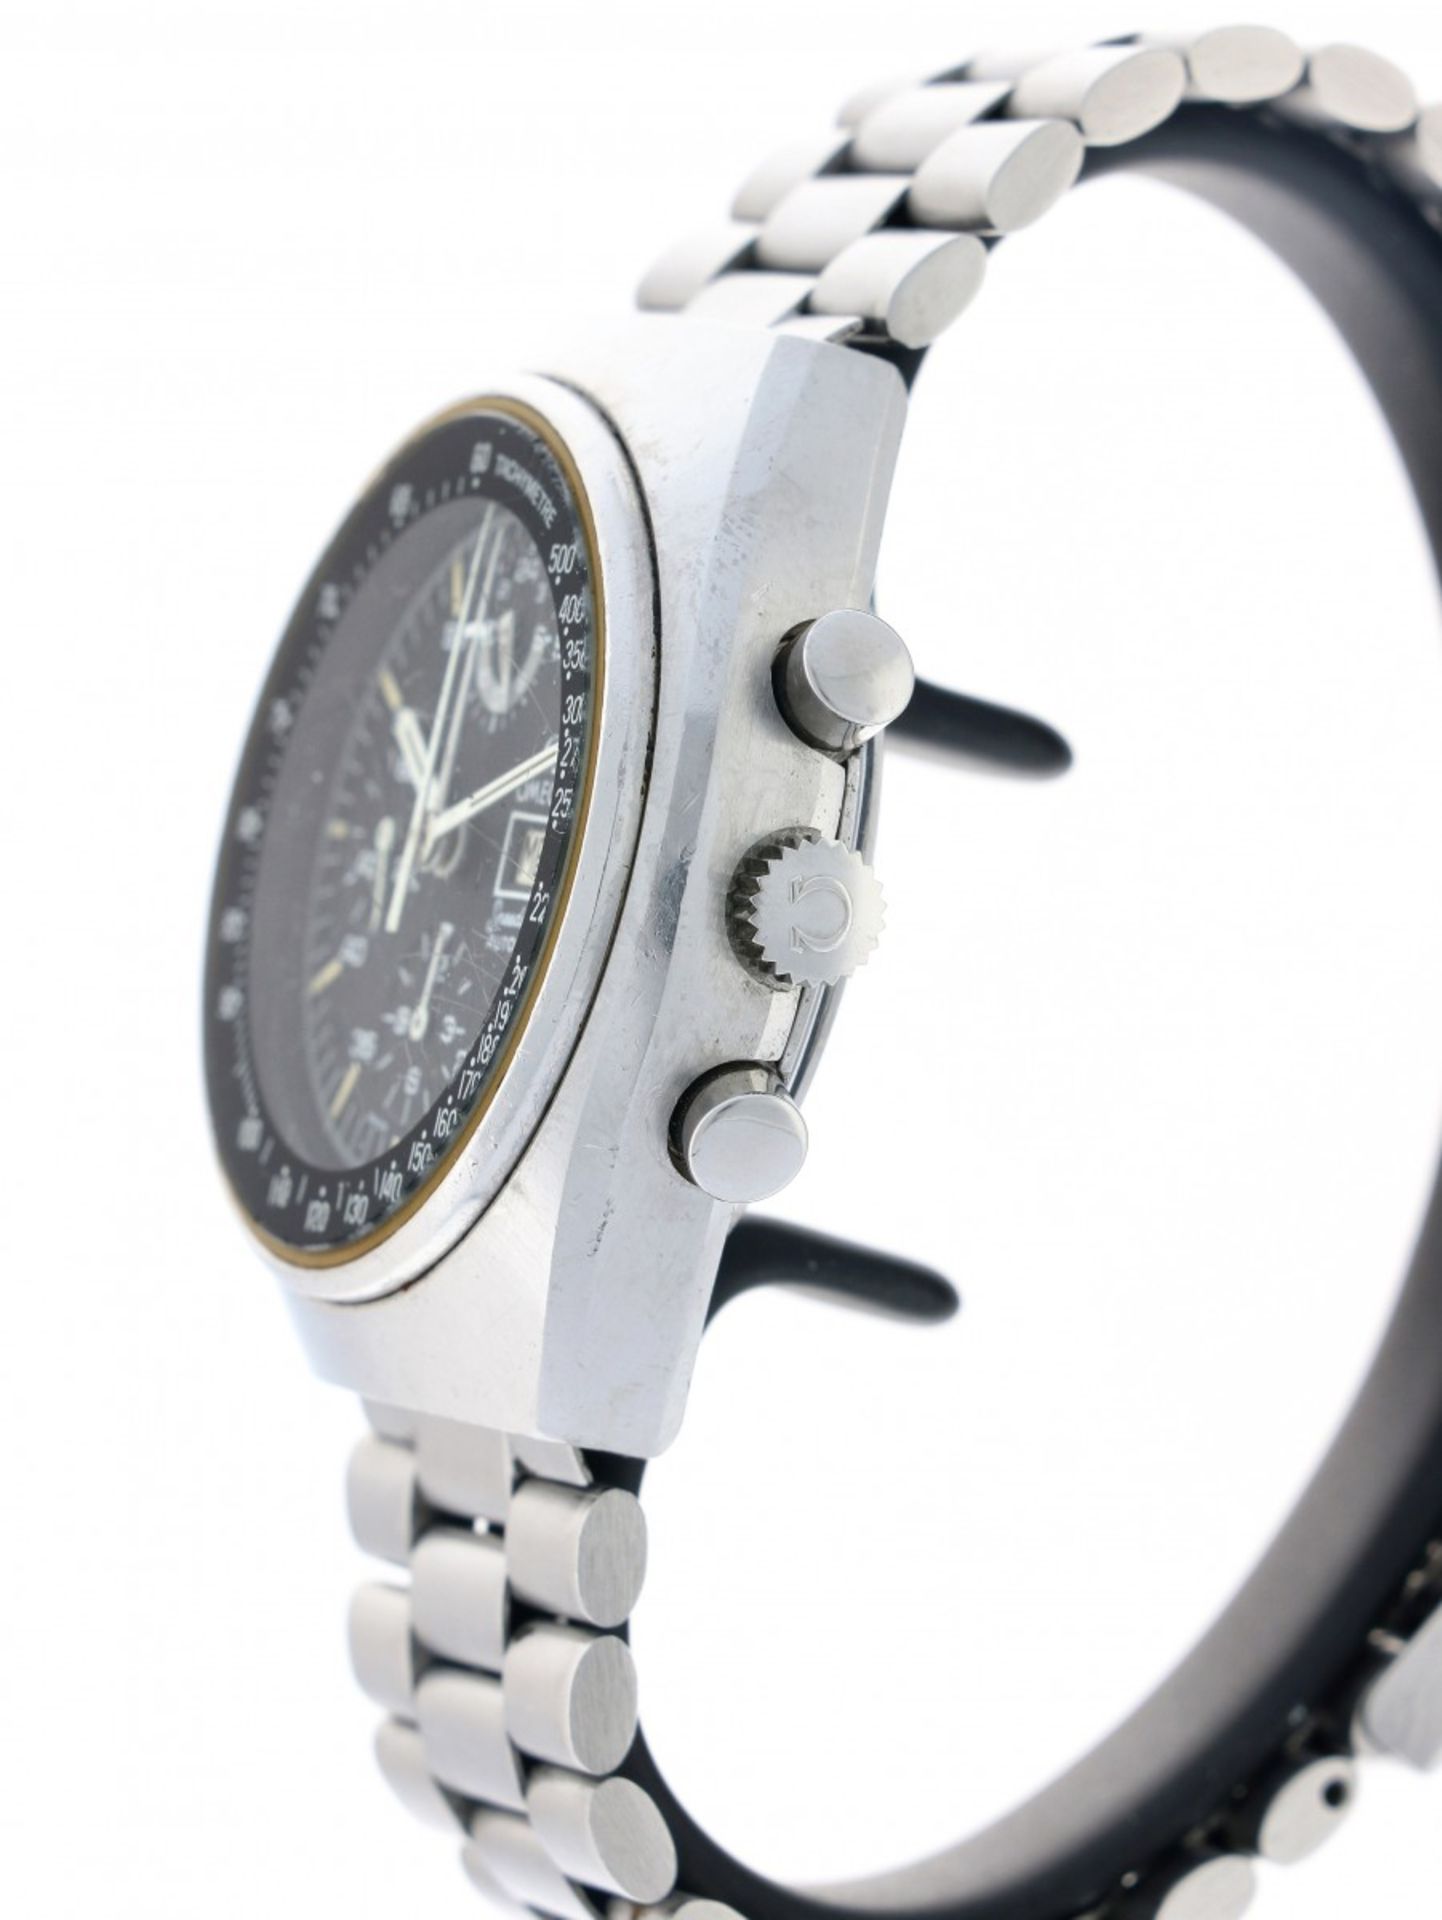 Omega Speedmaster mark 4.5 176.0012 - Men's watch - Approx. 1975. - Image 5 of 8